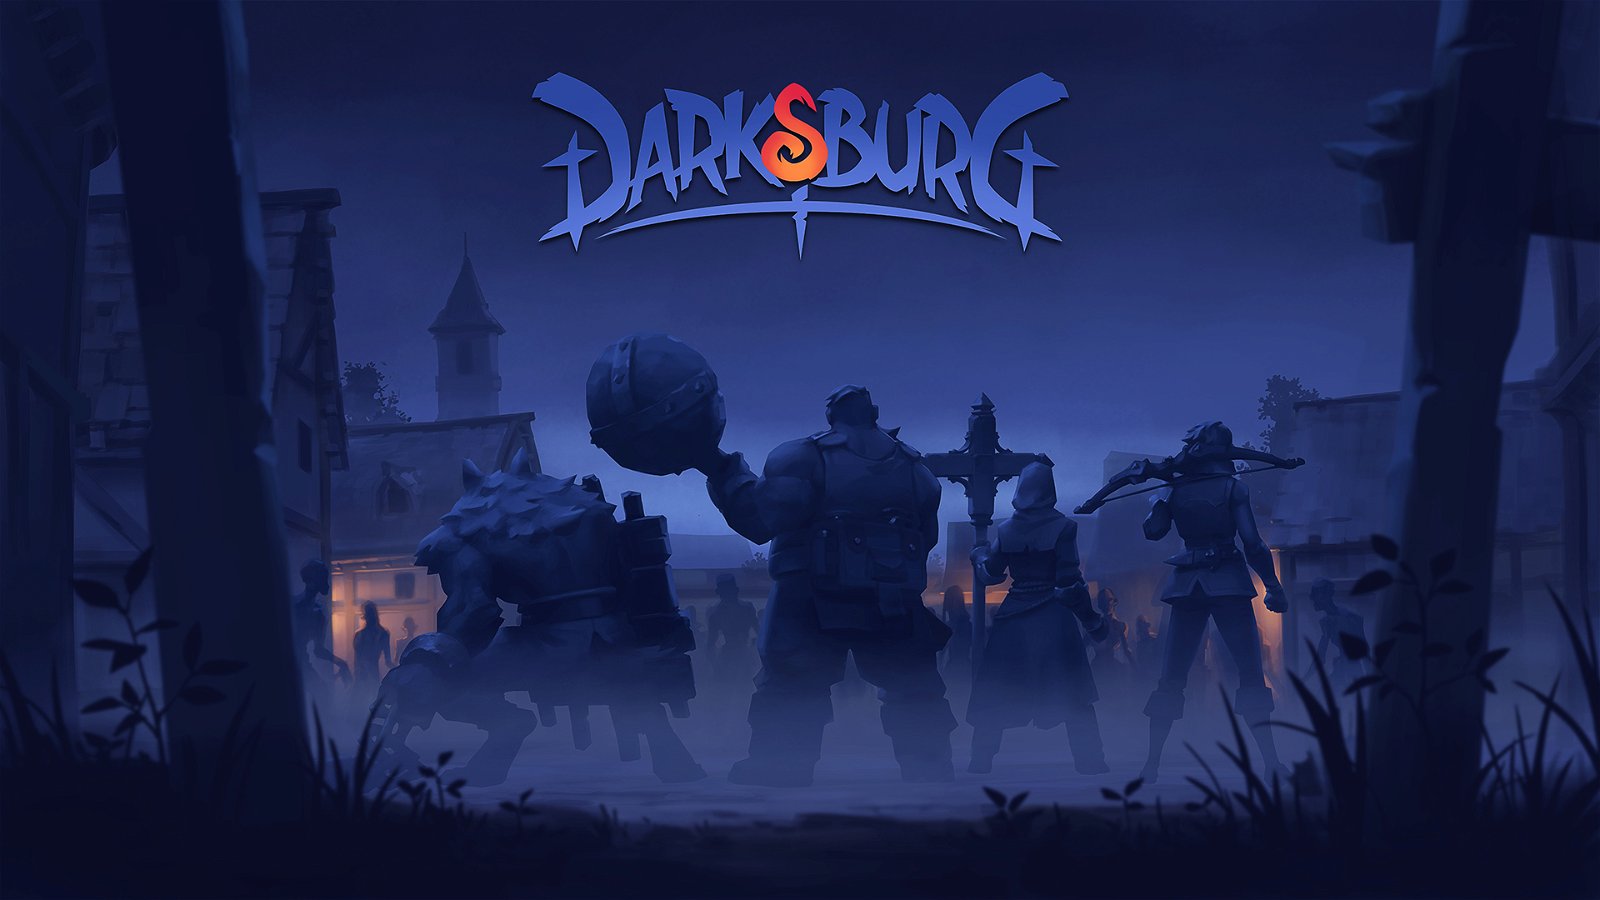 Darksburg, cooperare per sopravvivere - Provato